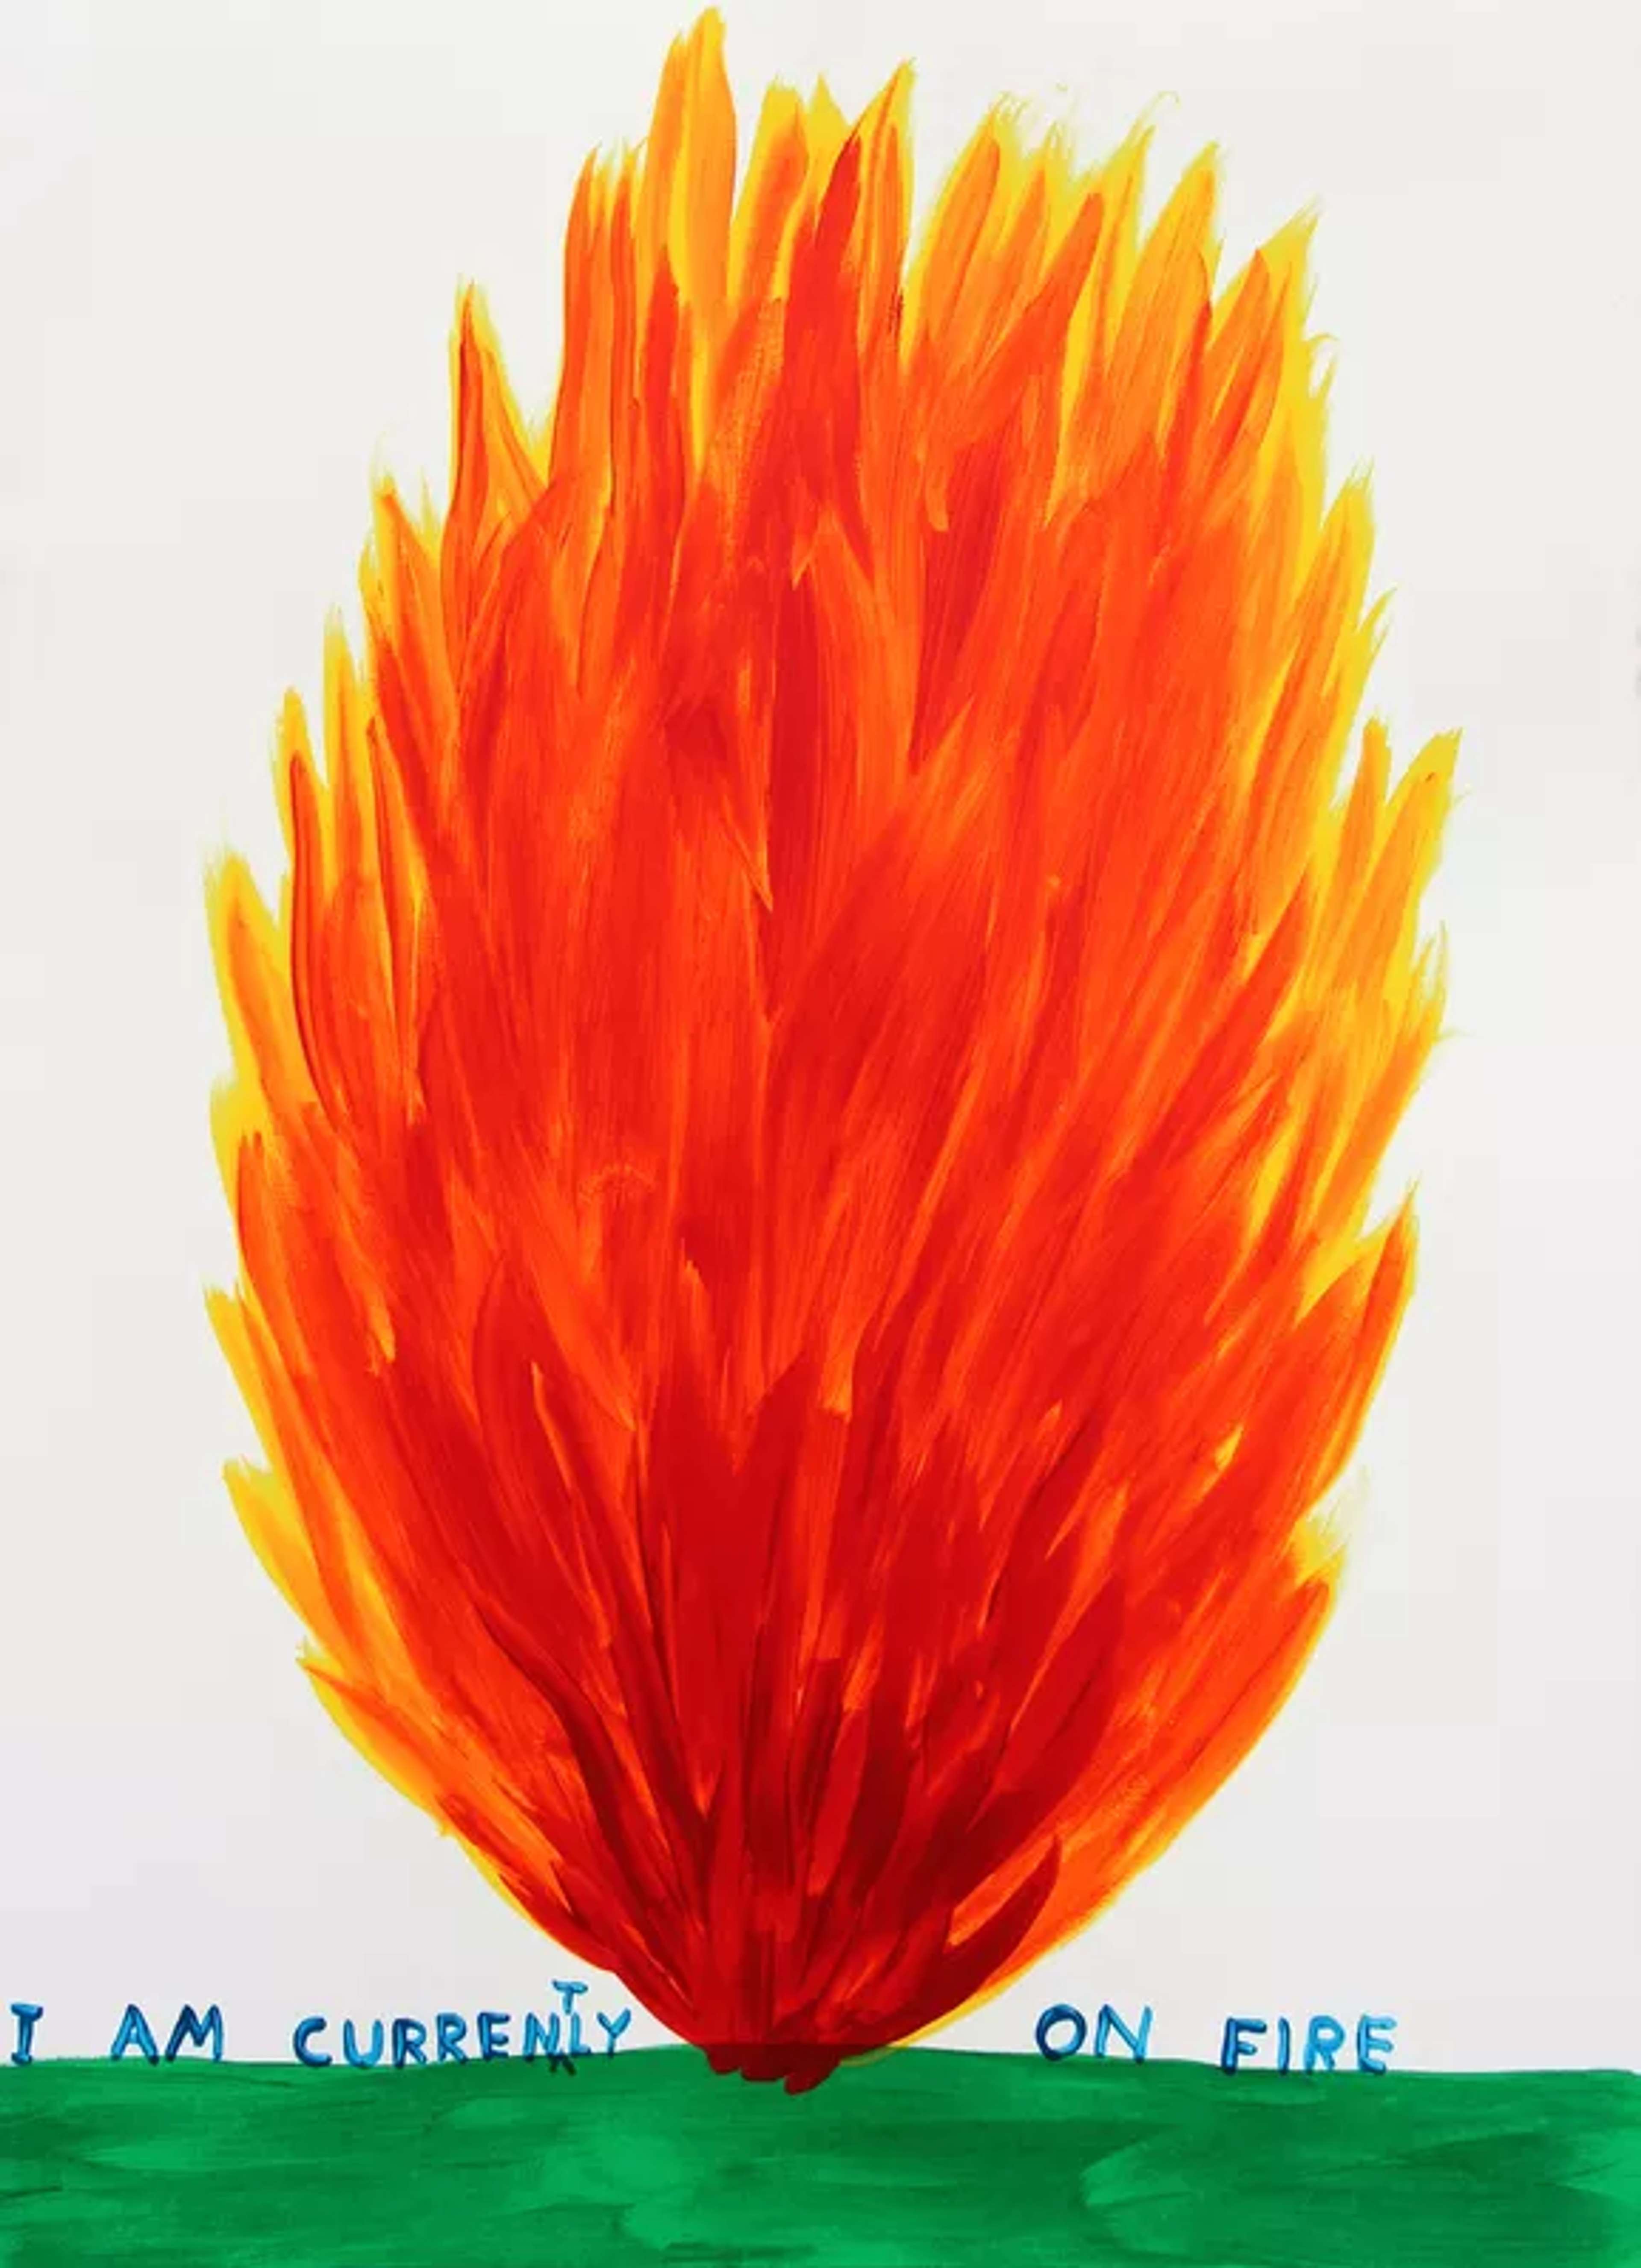 I Am Currently On Fire by David Shrigley